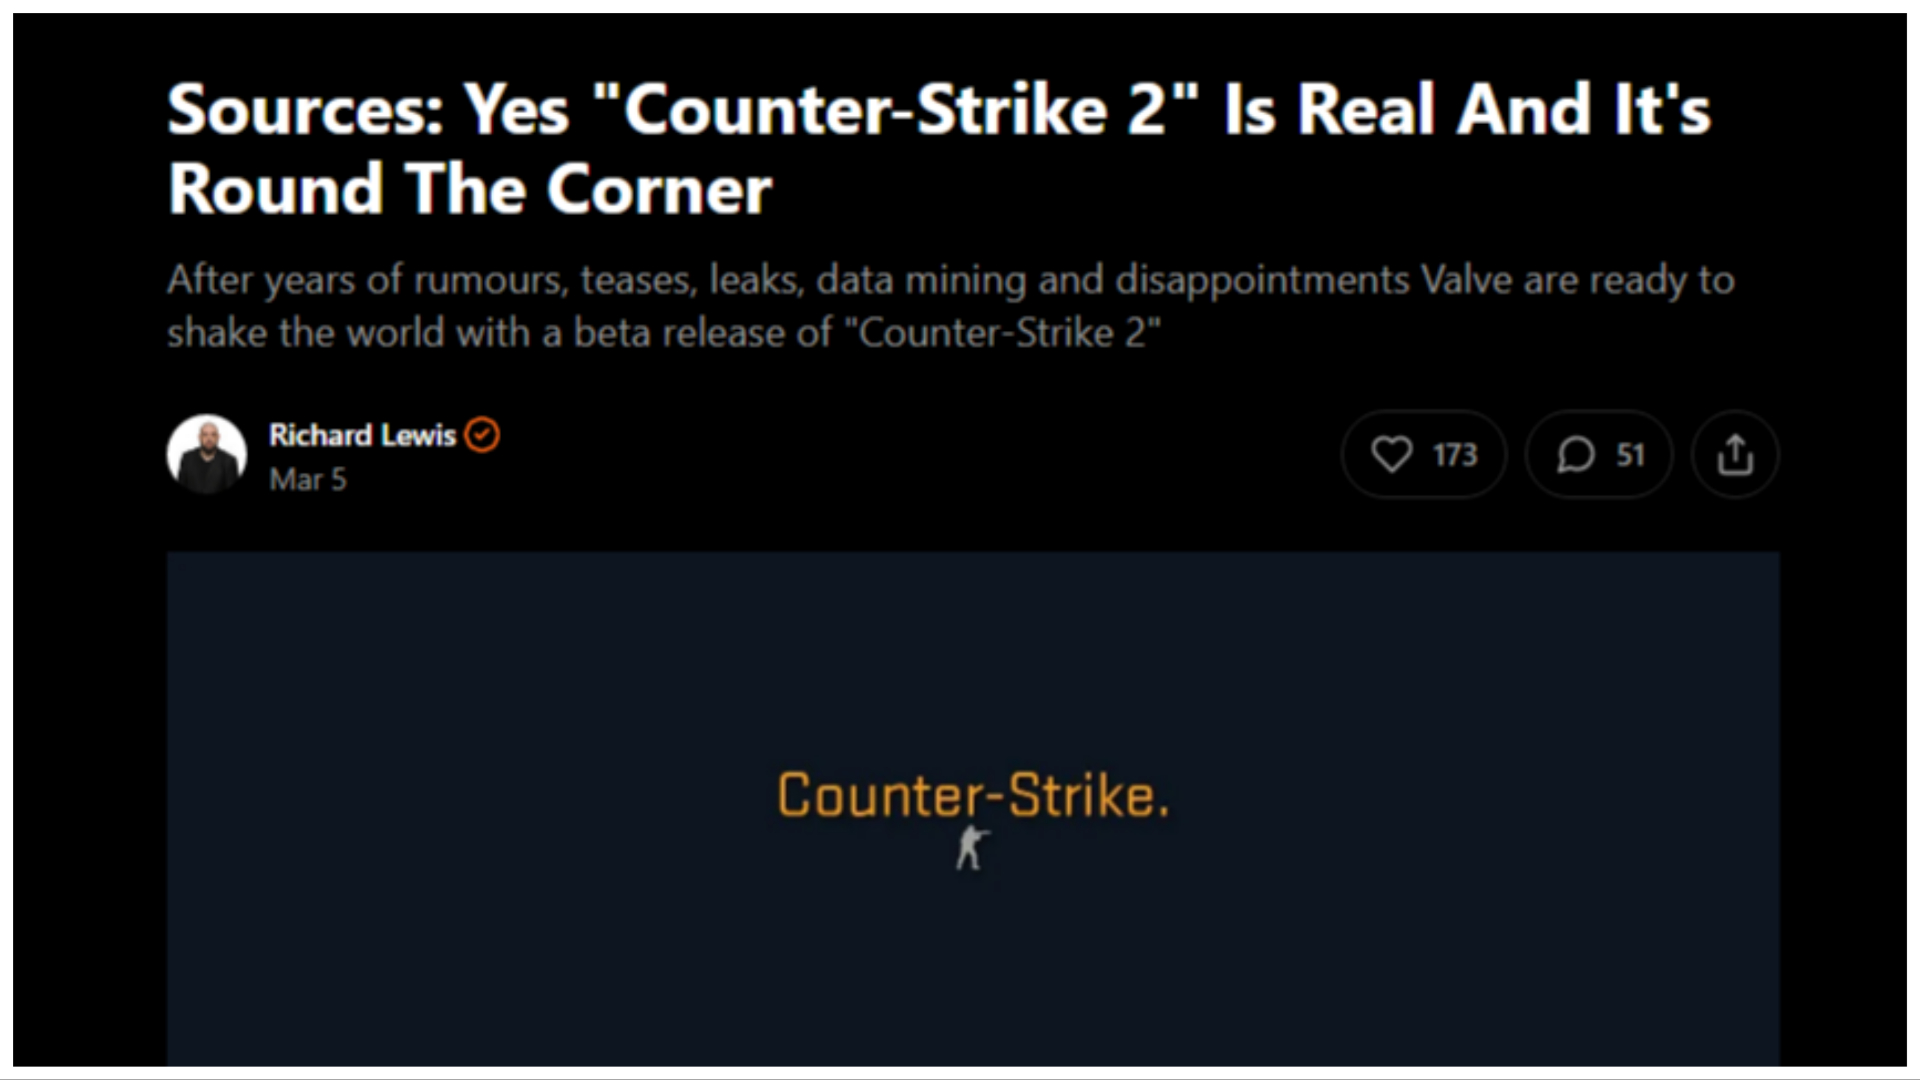 Richard Lewis on Counter-Strike 2 news